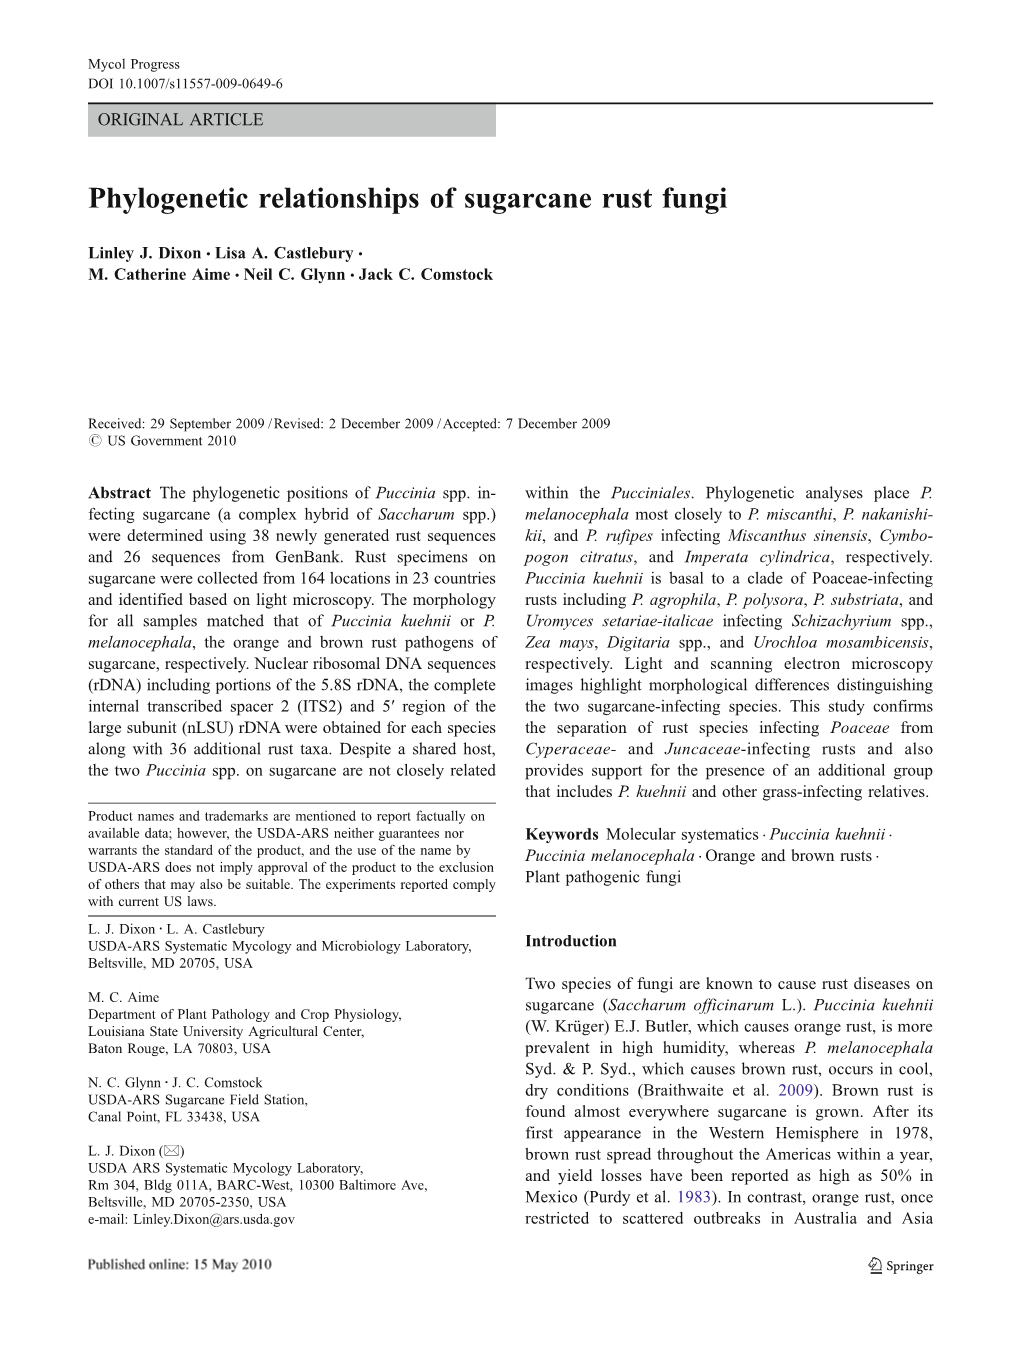 Phylogenetic Relationships of Sugarcane Rust Fungi